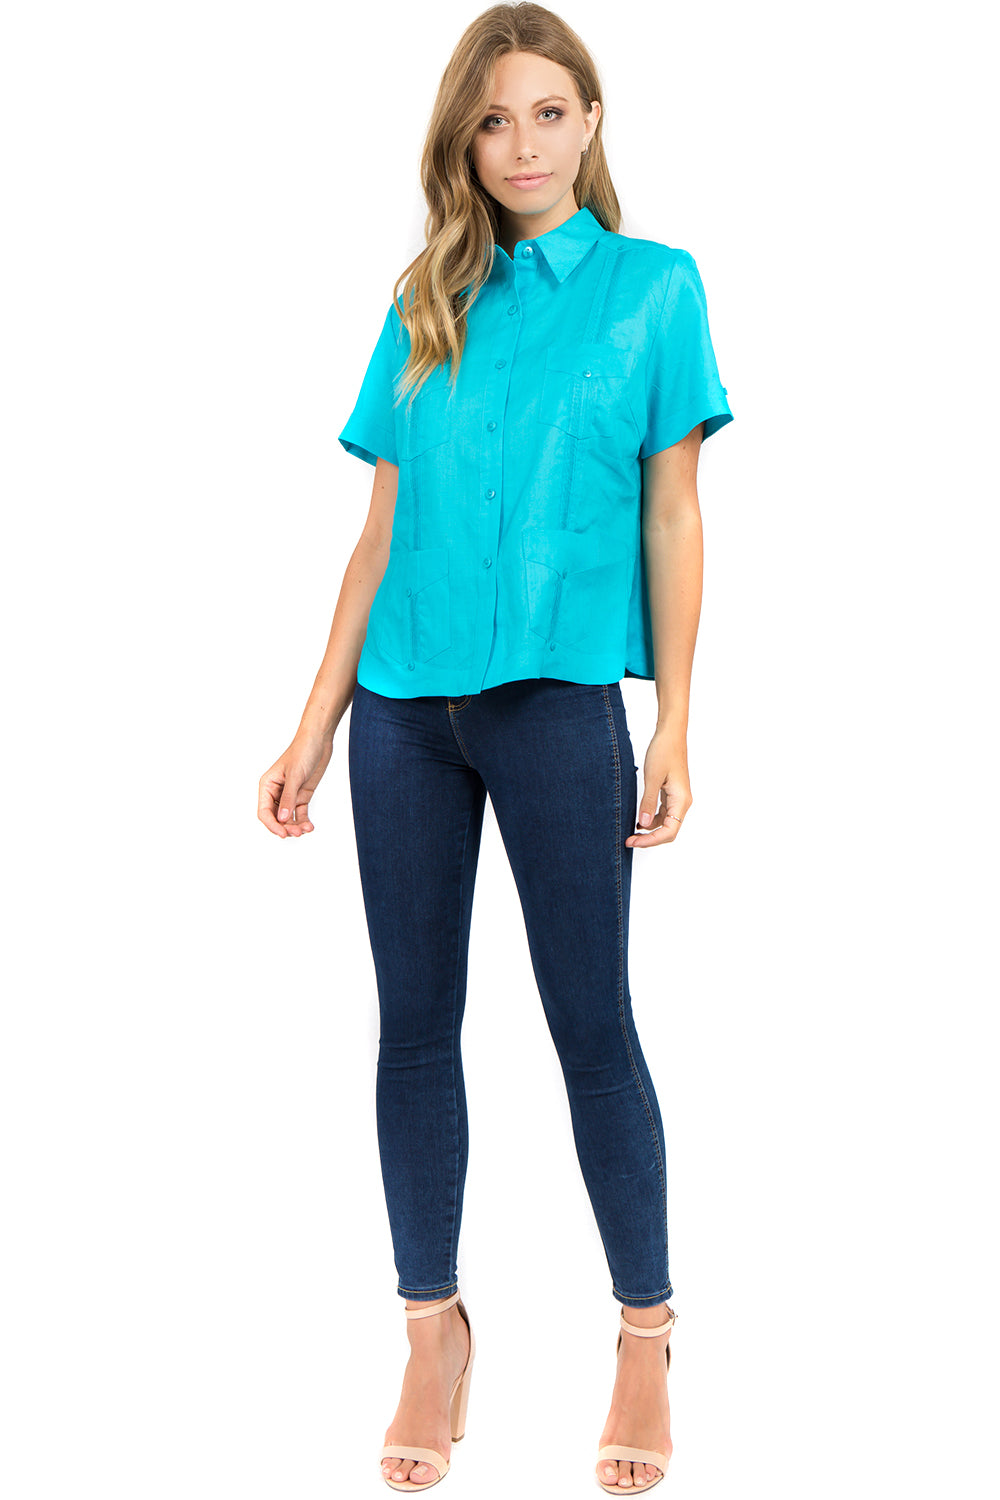 Women's Traditional Guayabera Shirt Premium 100% Linen Short Sleeve XS-3X